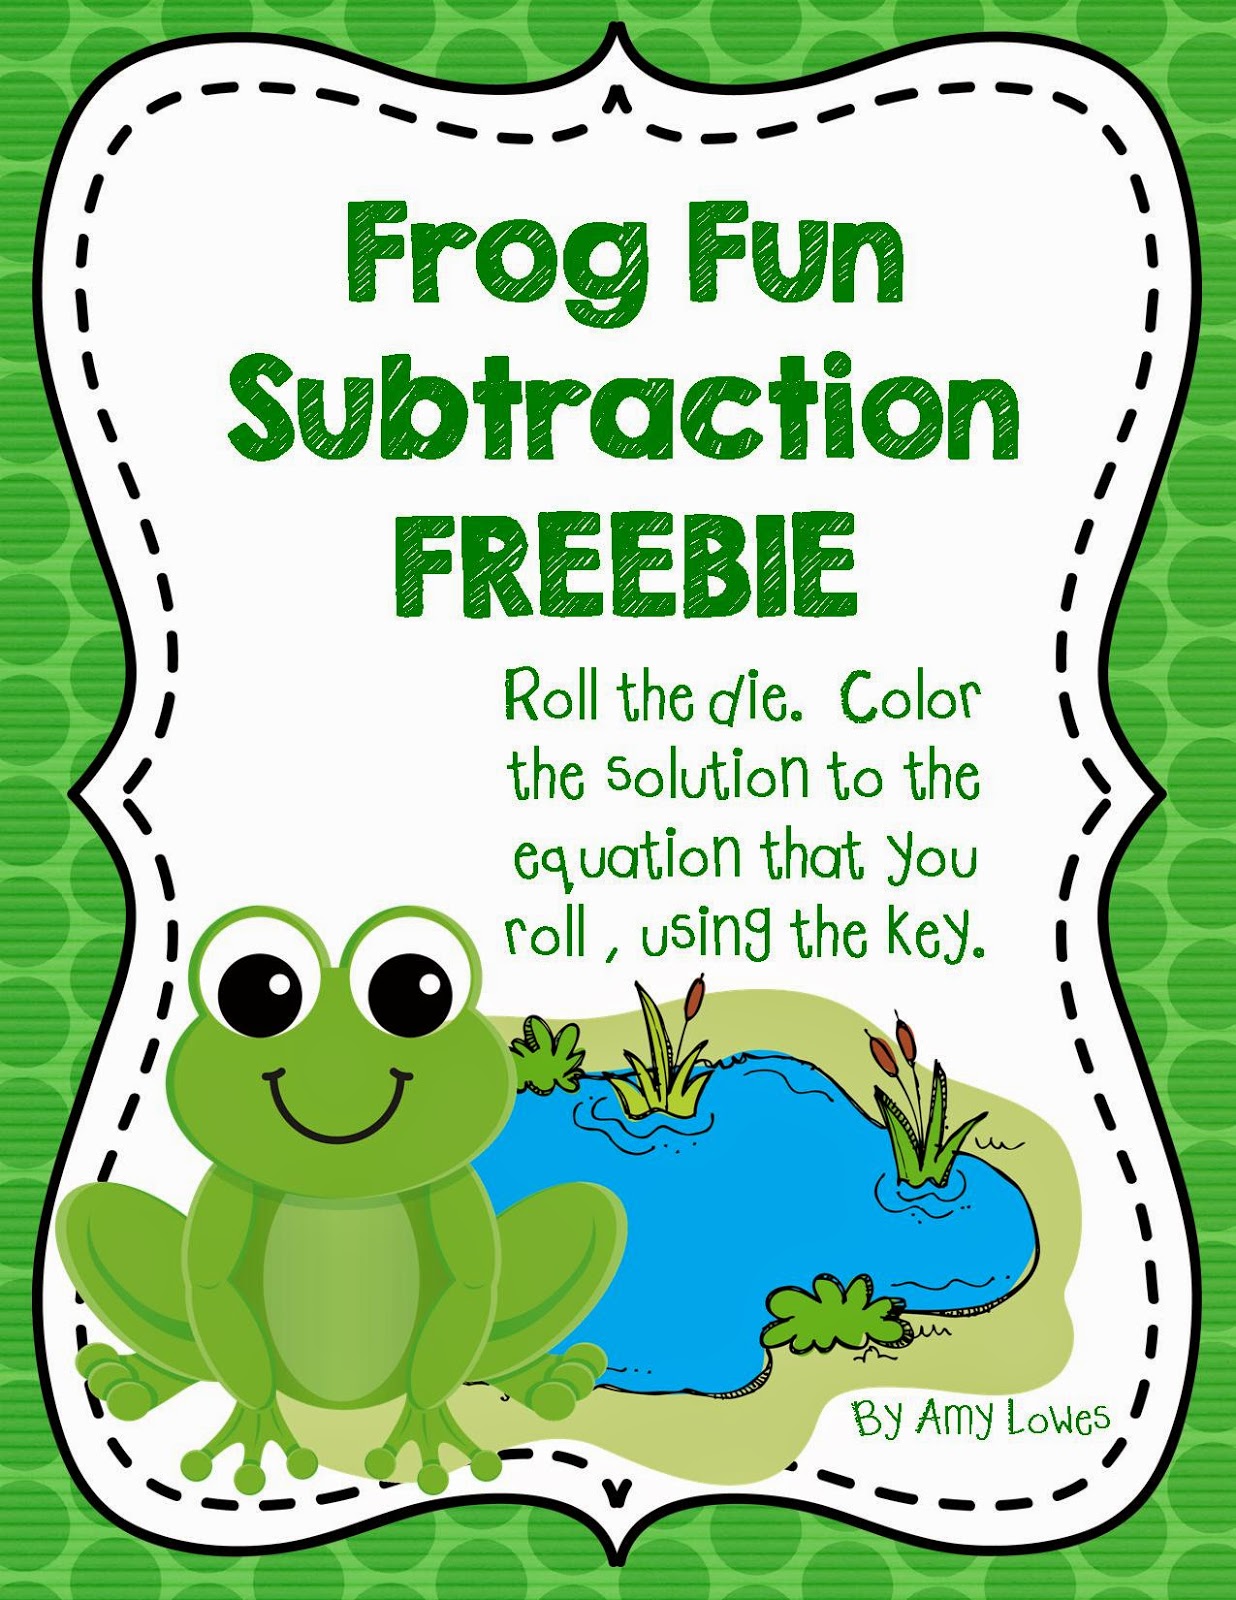 http://www.teacherspayteachers.com/Product/Frog-Fun-Subtraction-FREEBIE-1217341